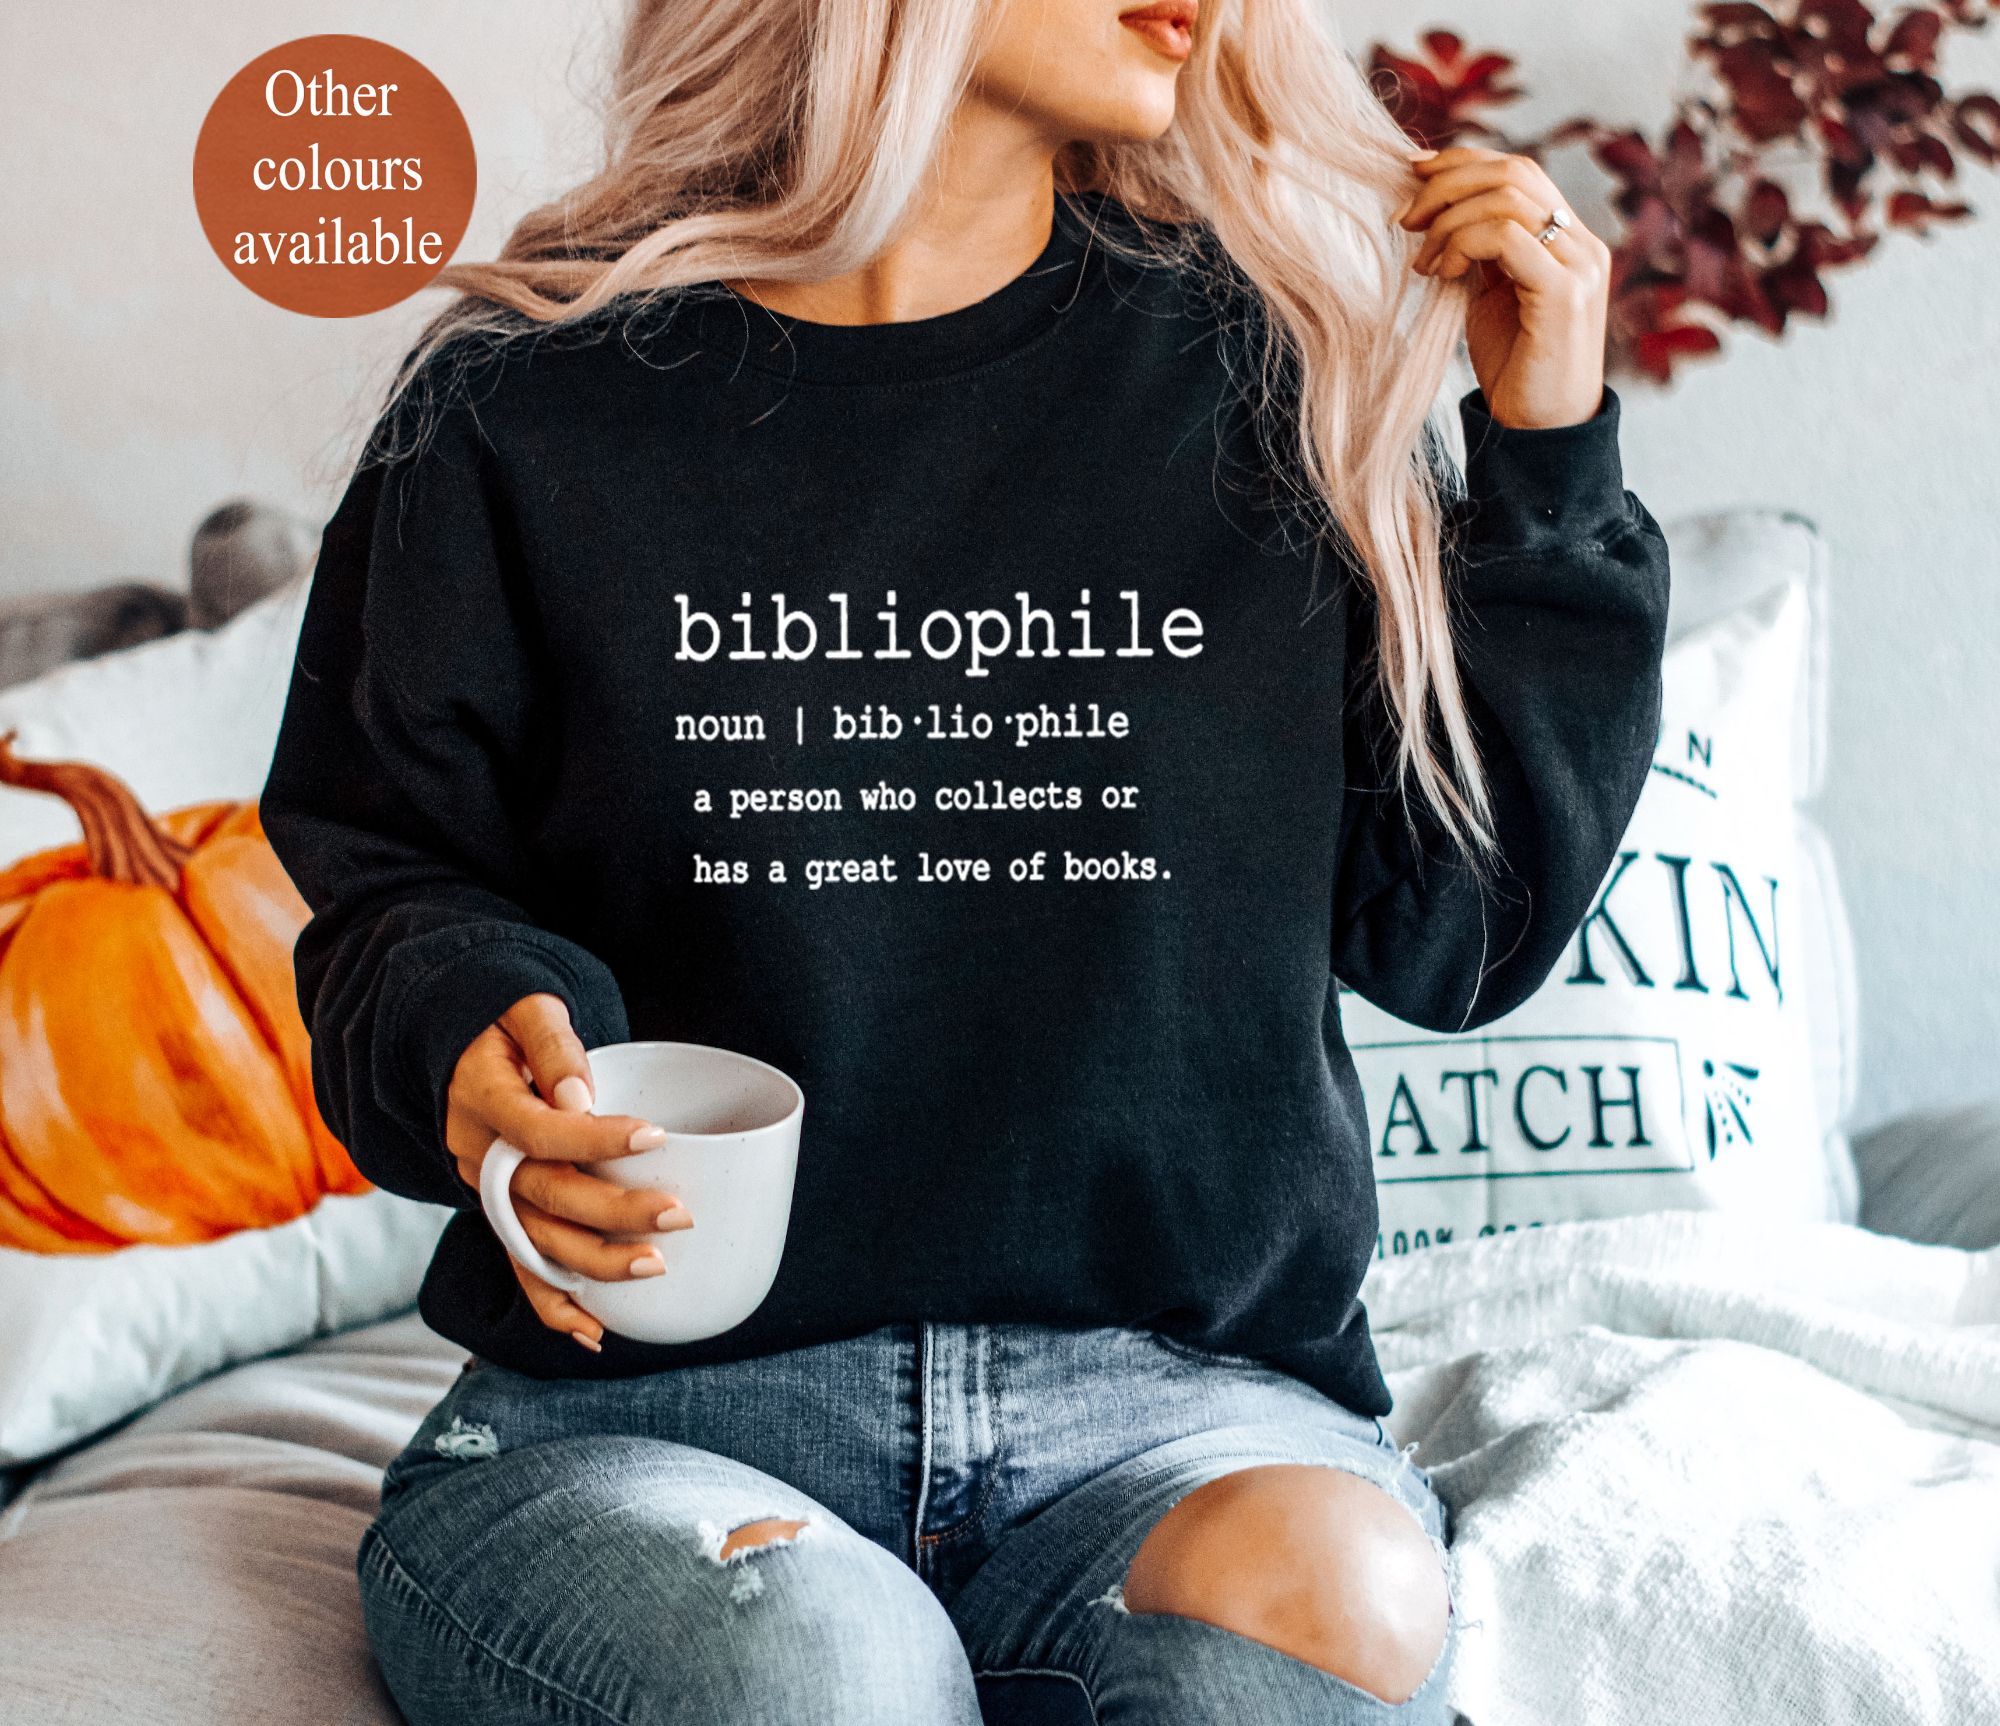                                  Bilbiophile Sweatshirt